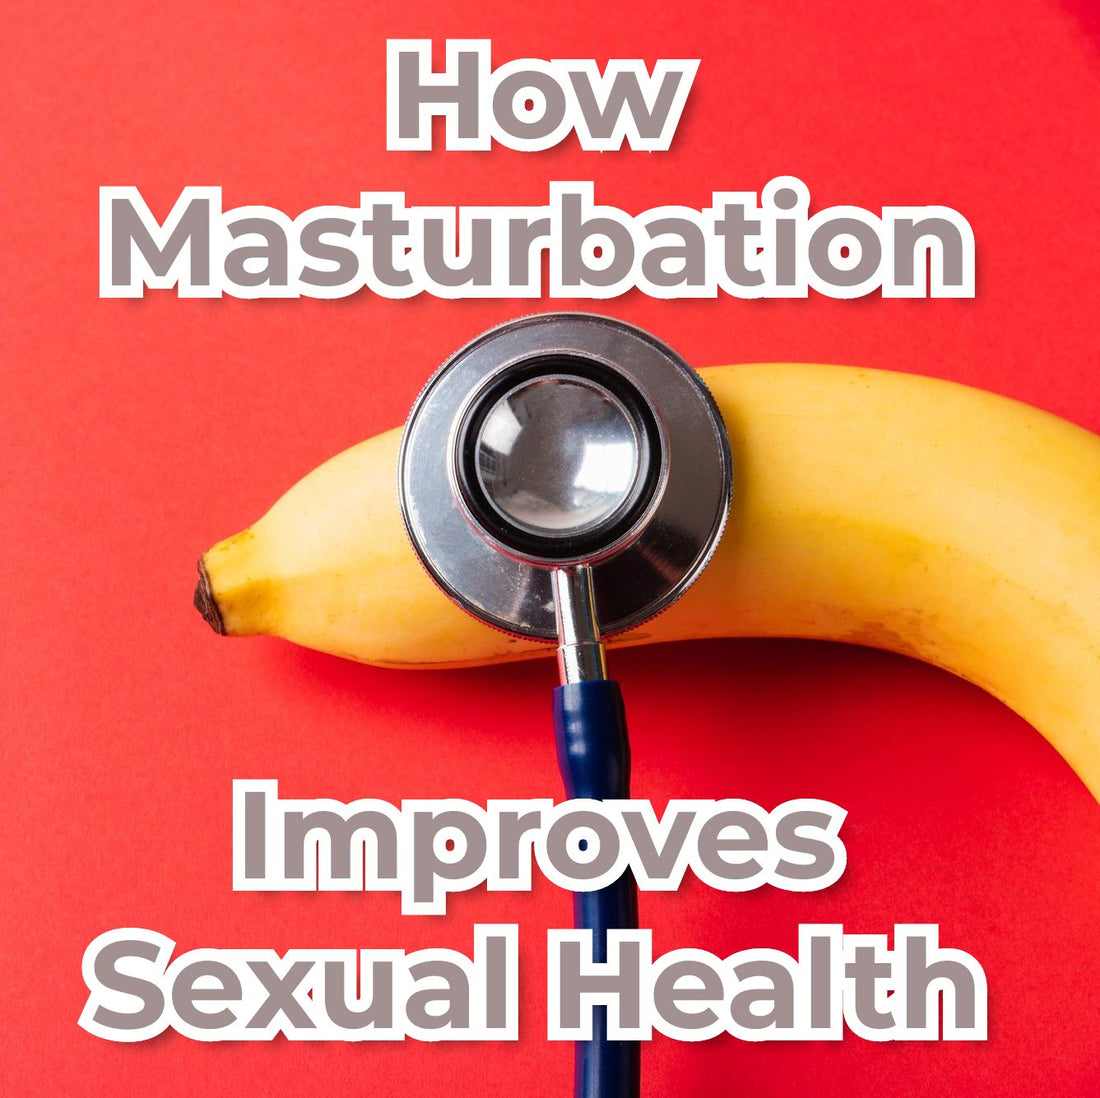 7 Ways Masturbation Improves Sexual Health